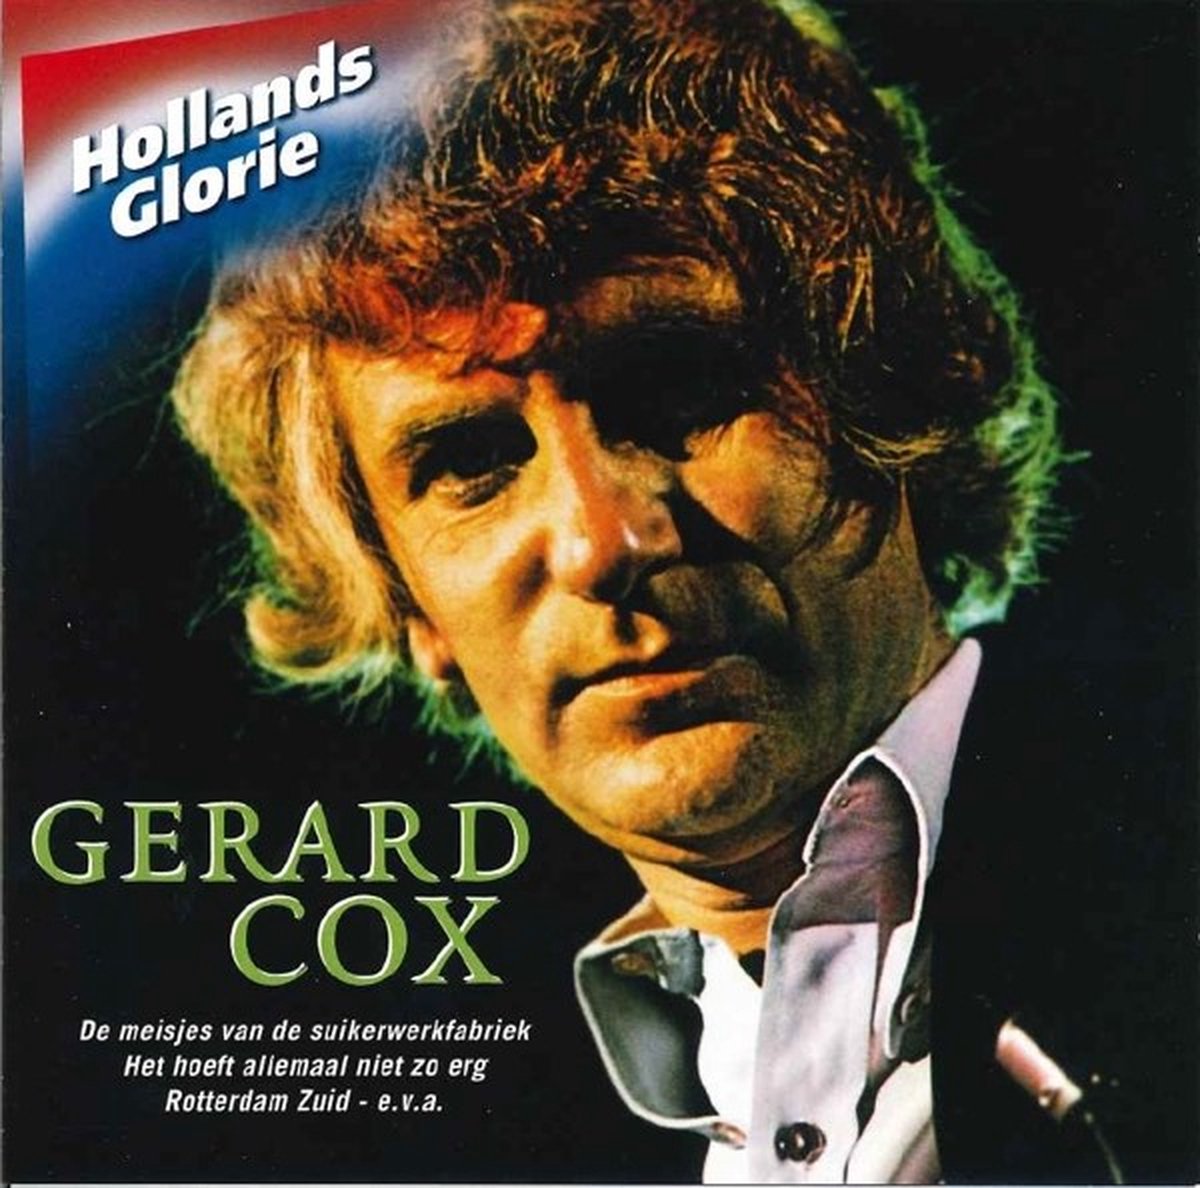 Gerard Cox - Hollands Glorie (CD) - Gerard Cox